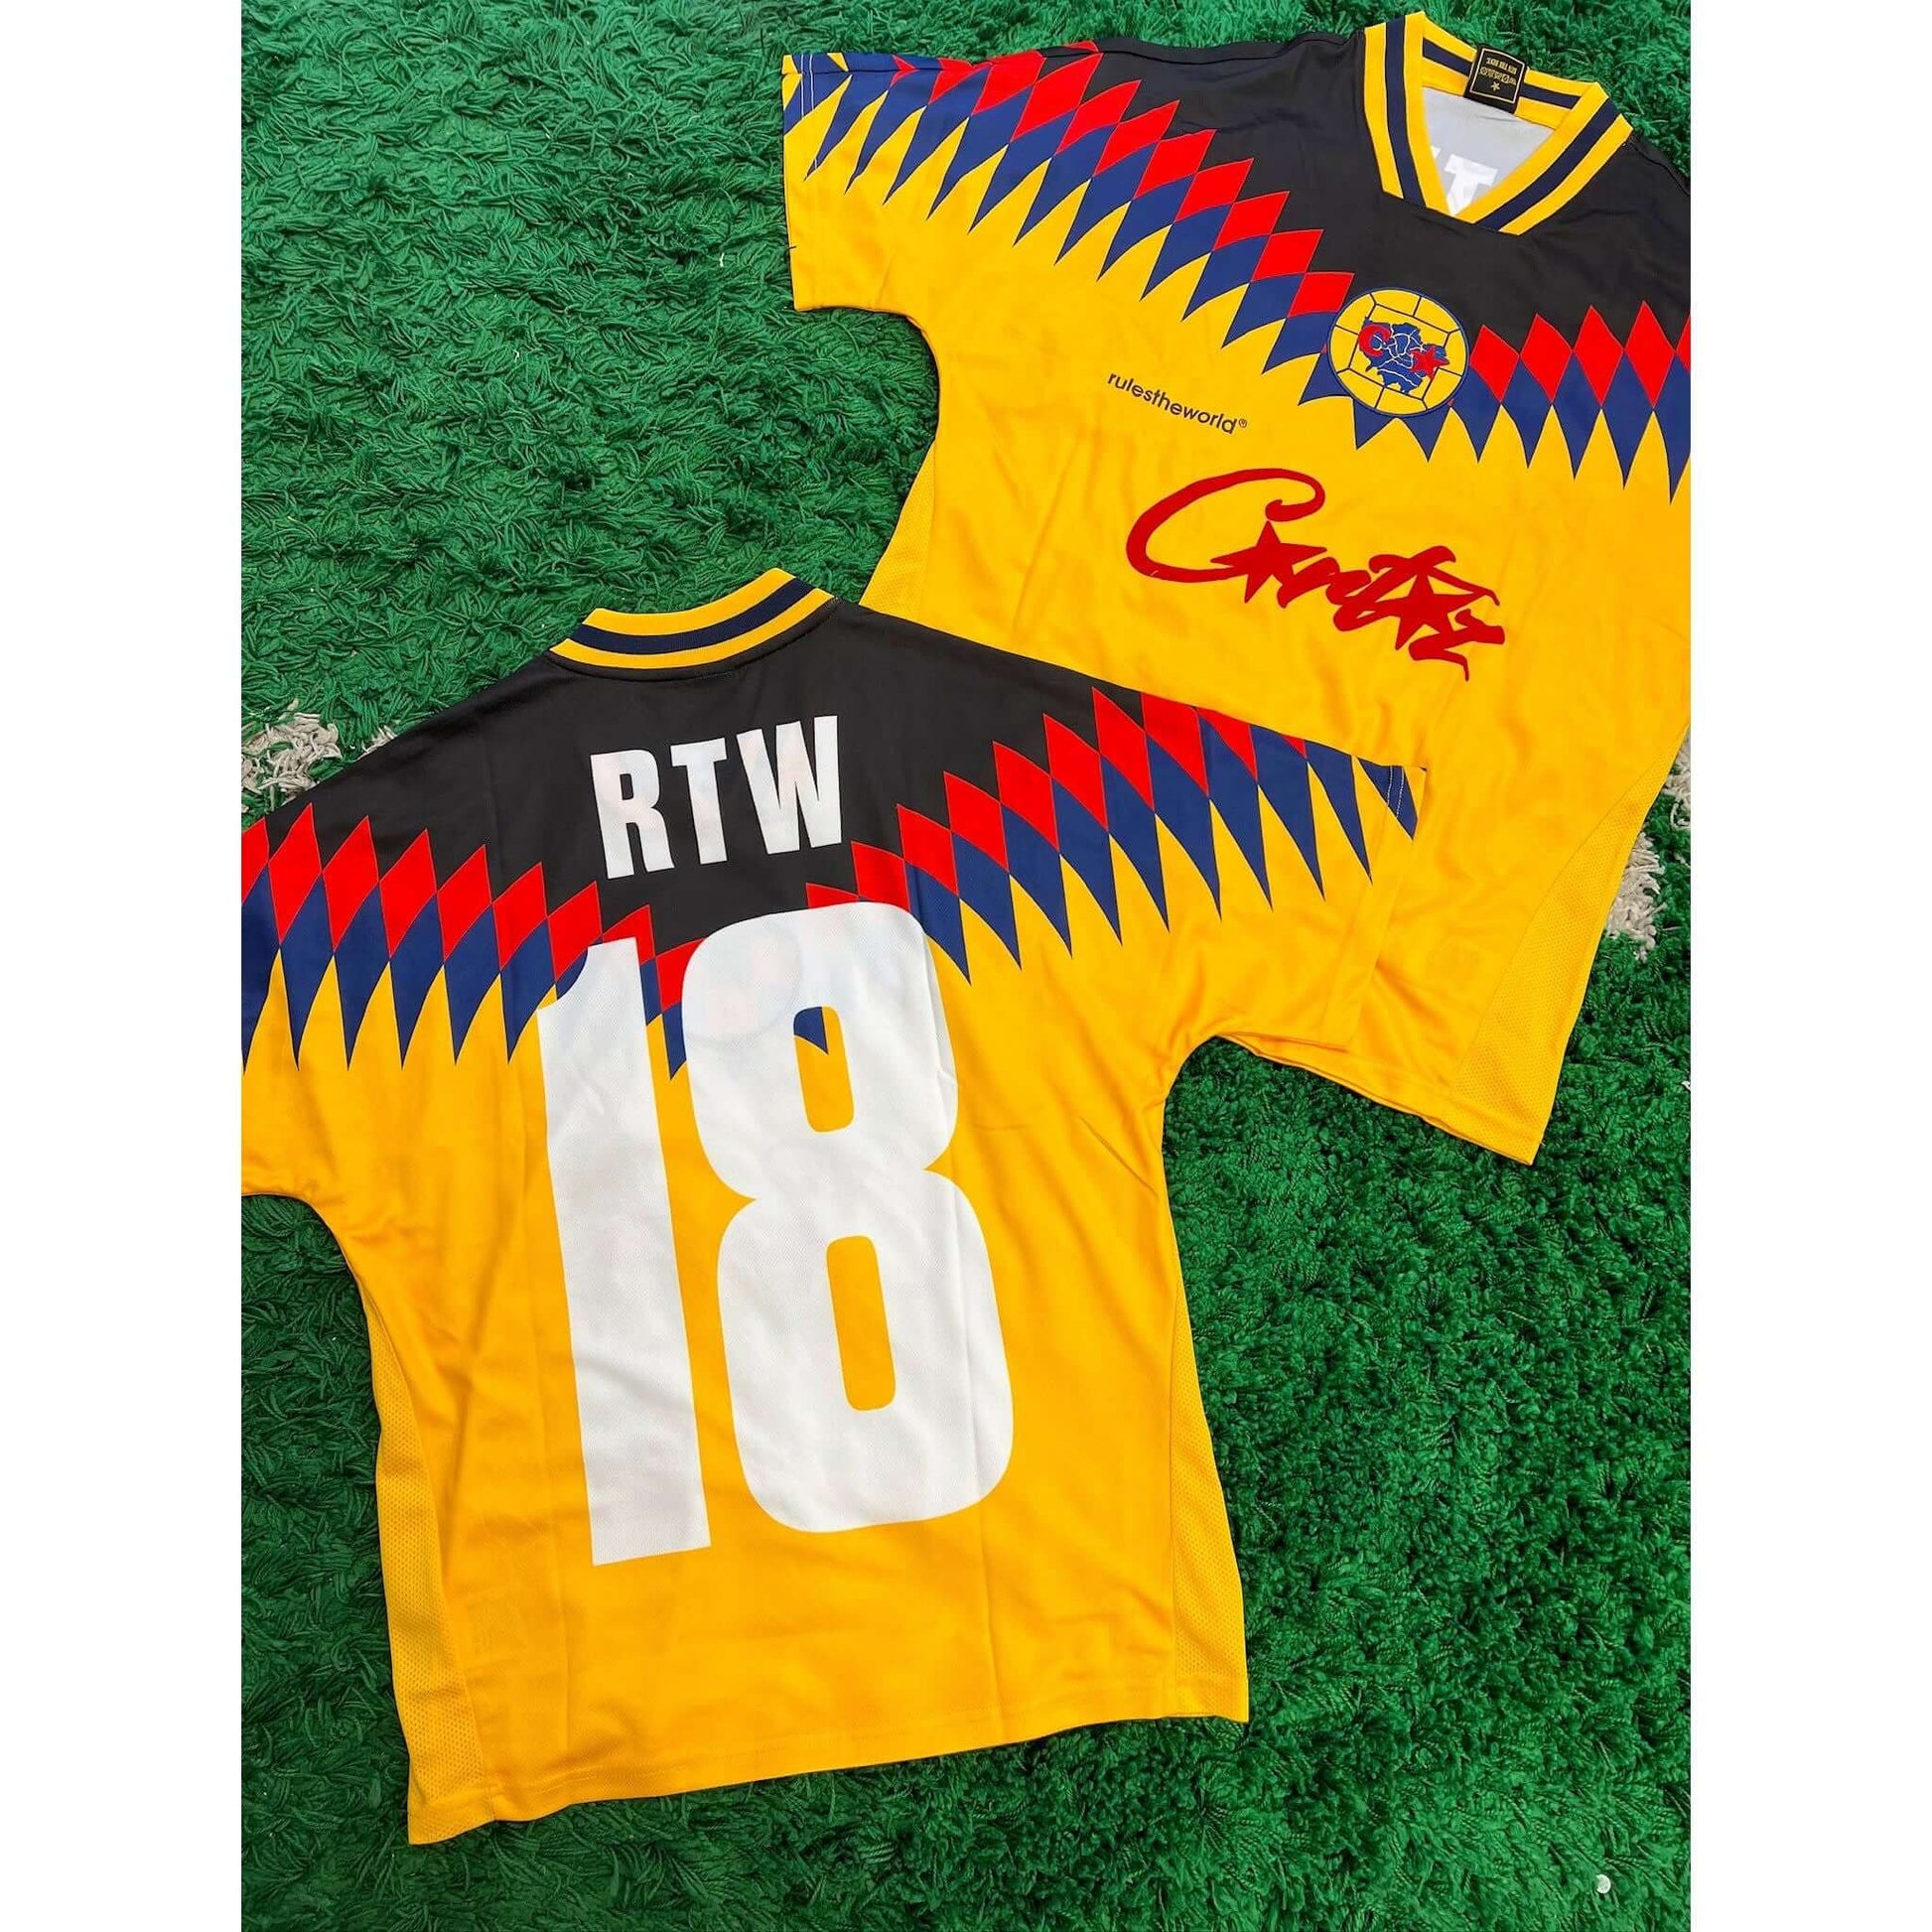 Corteiz Club RTW Football Jersey Multicolor by Corteiz from £165.00